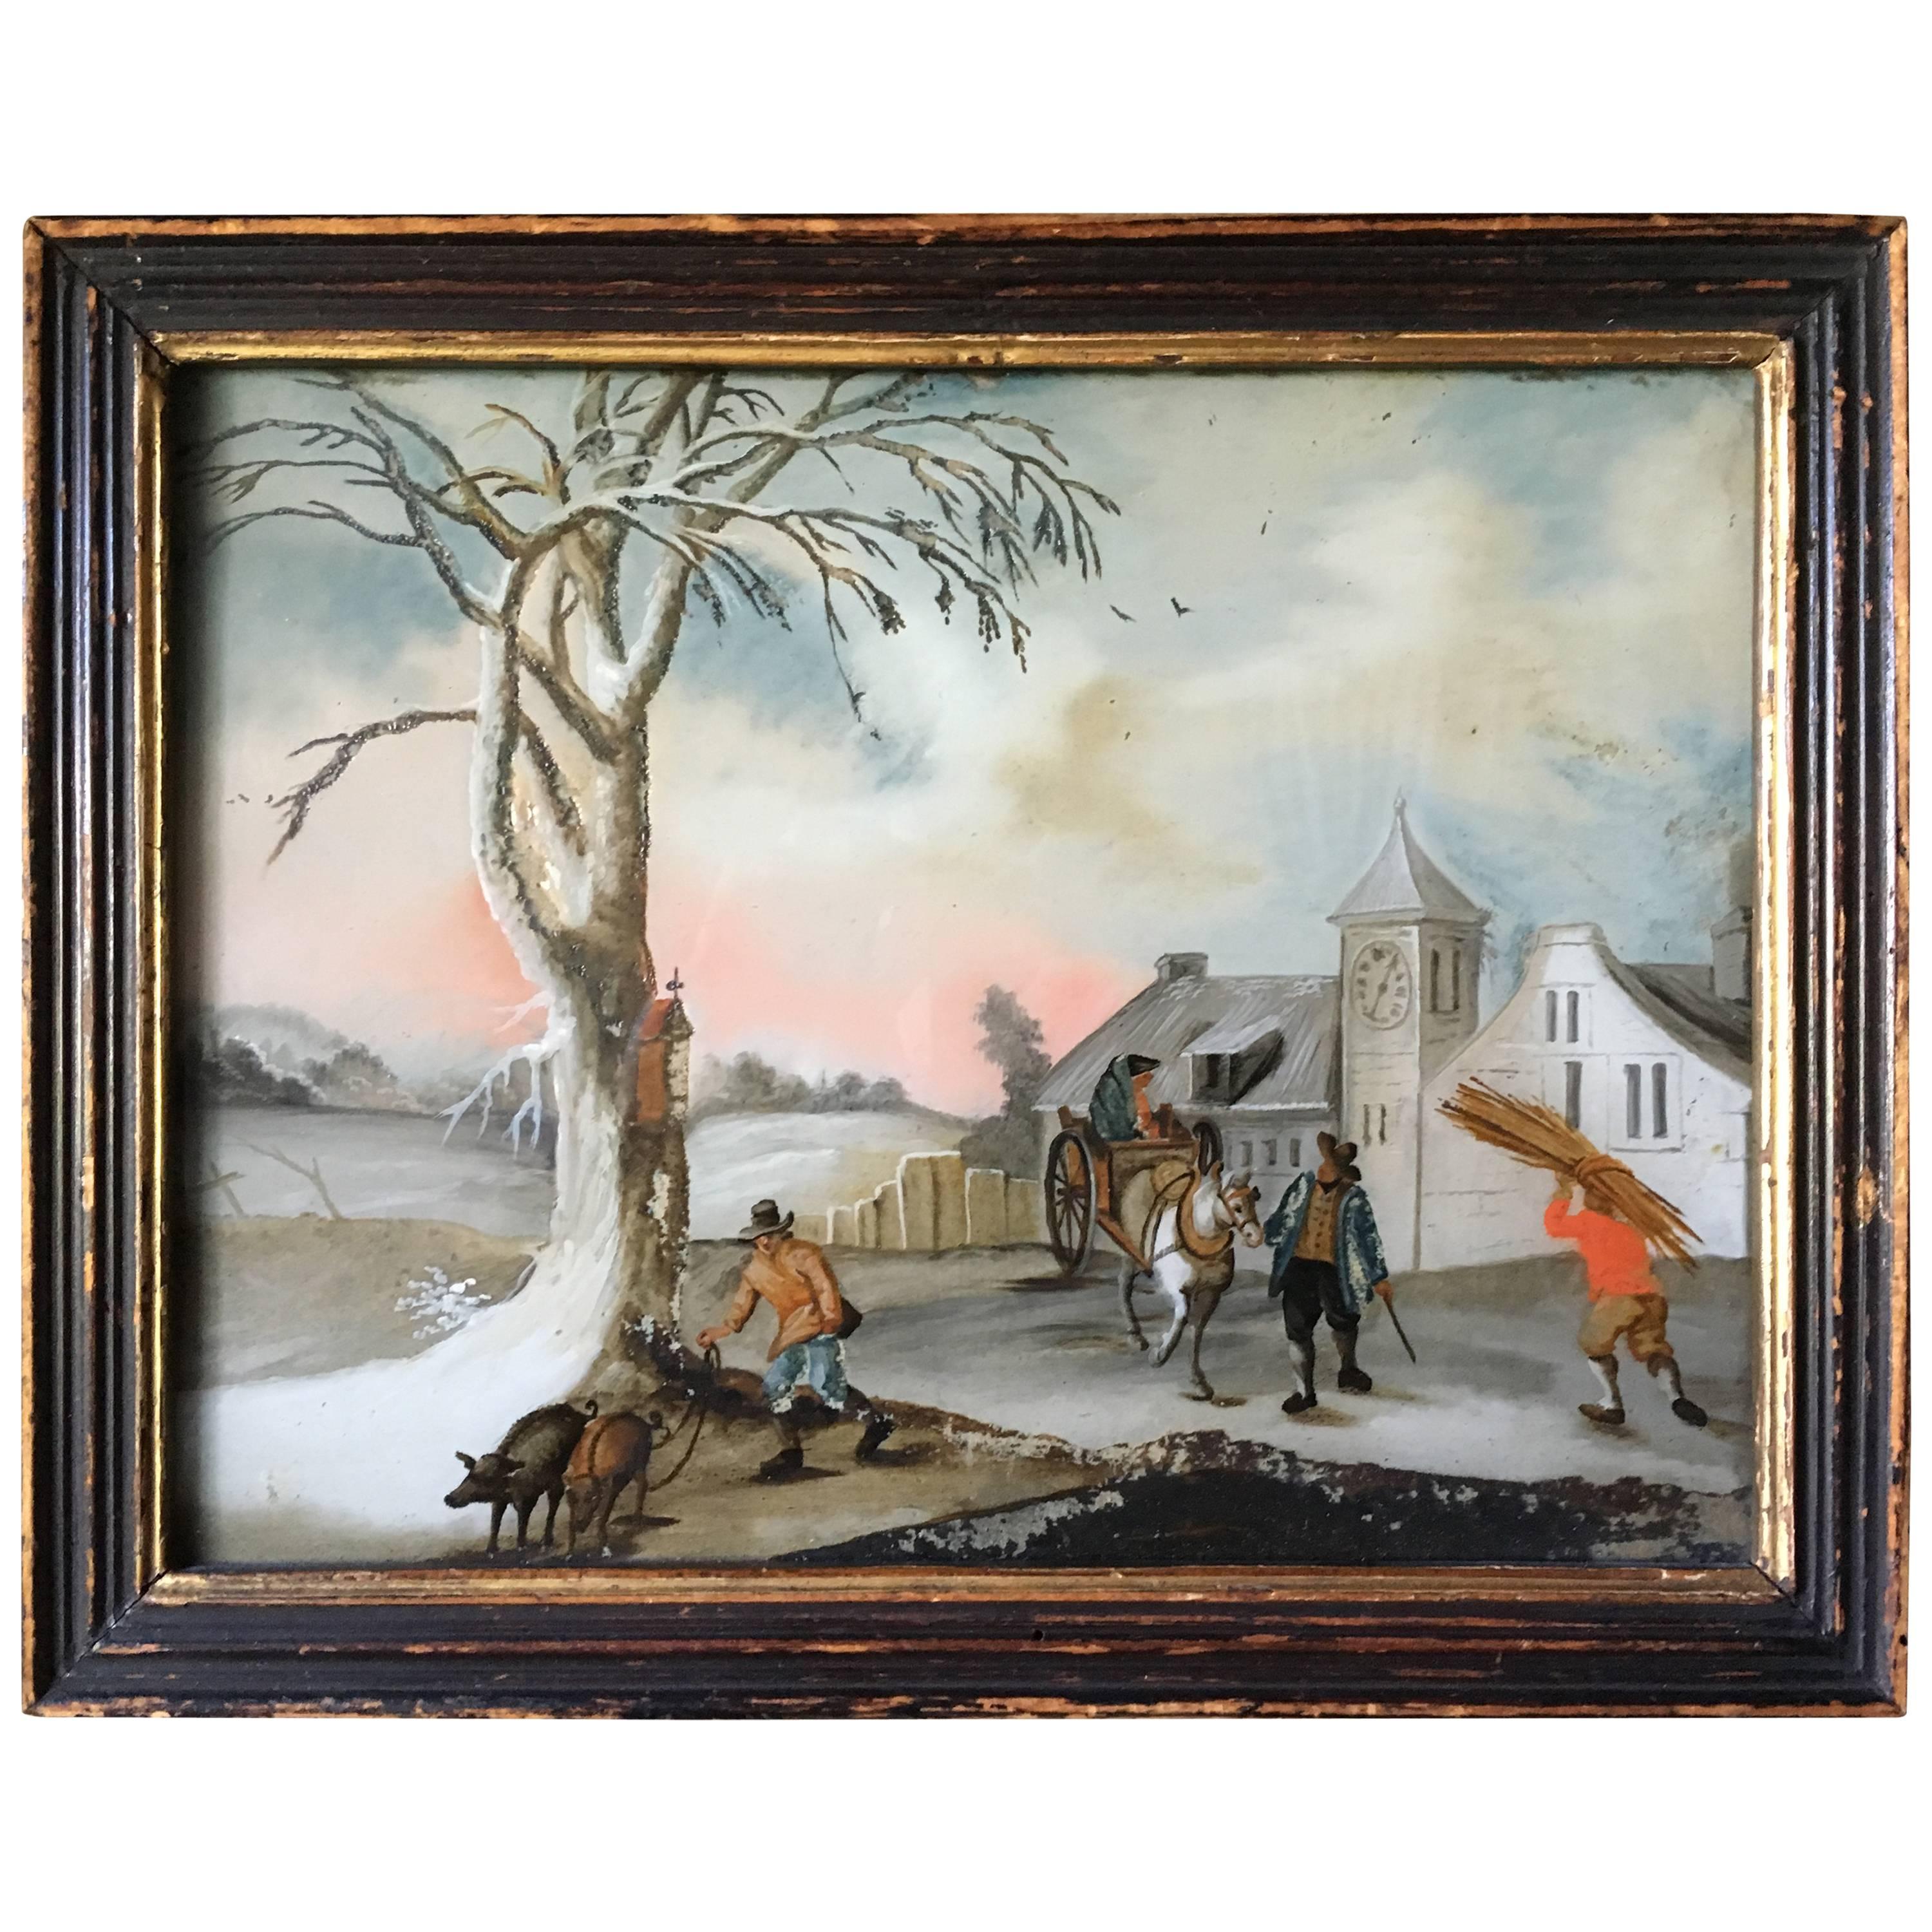 Small Églomisé Genre Painting, Early 19th Century